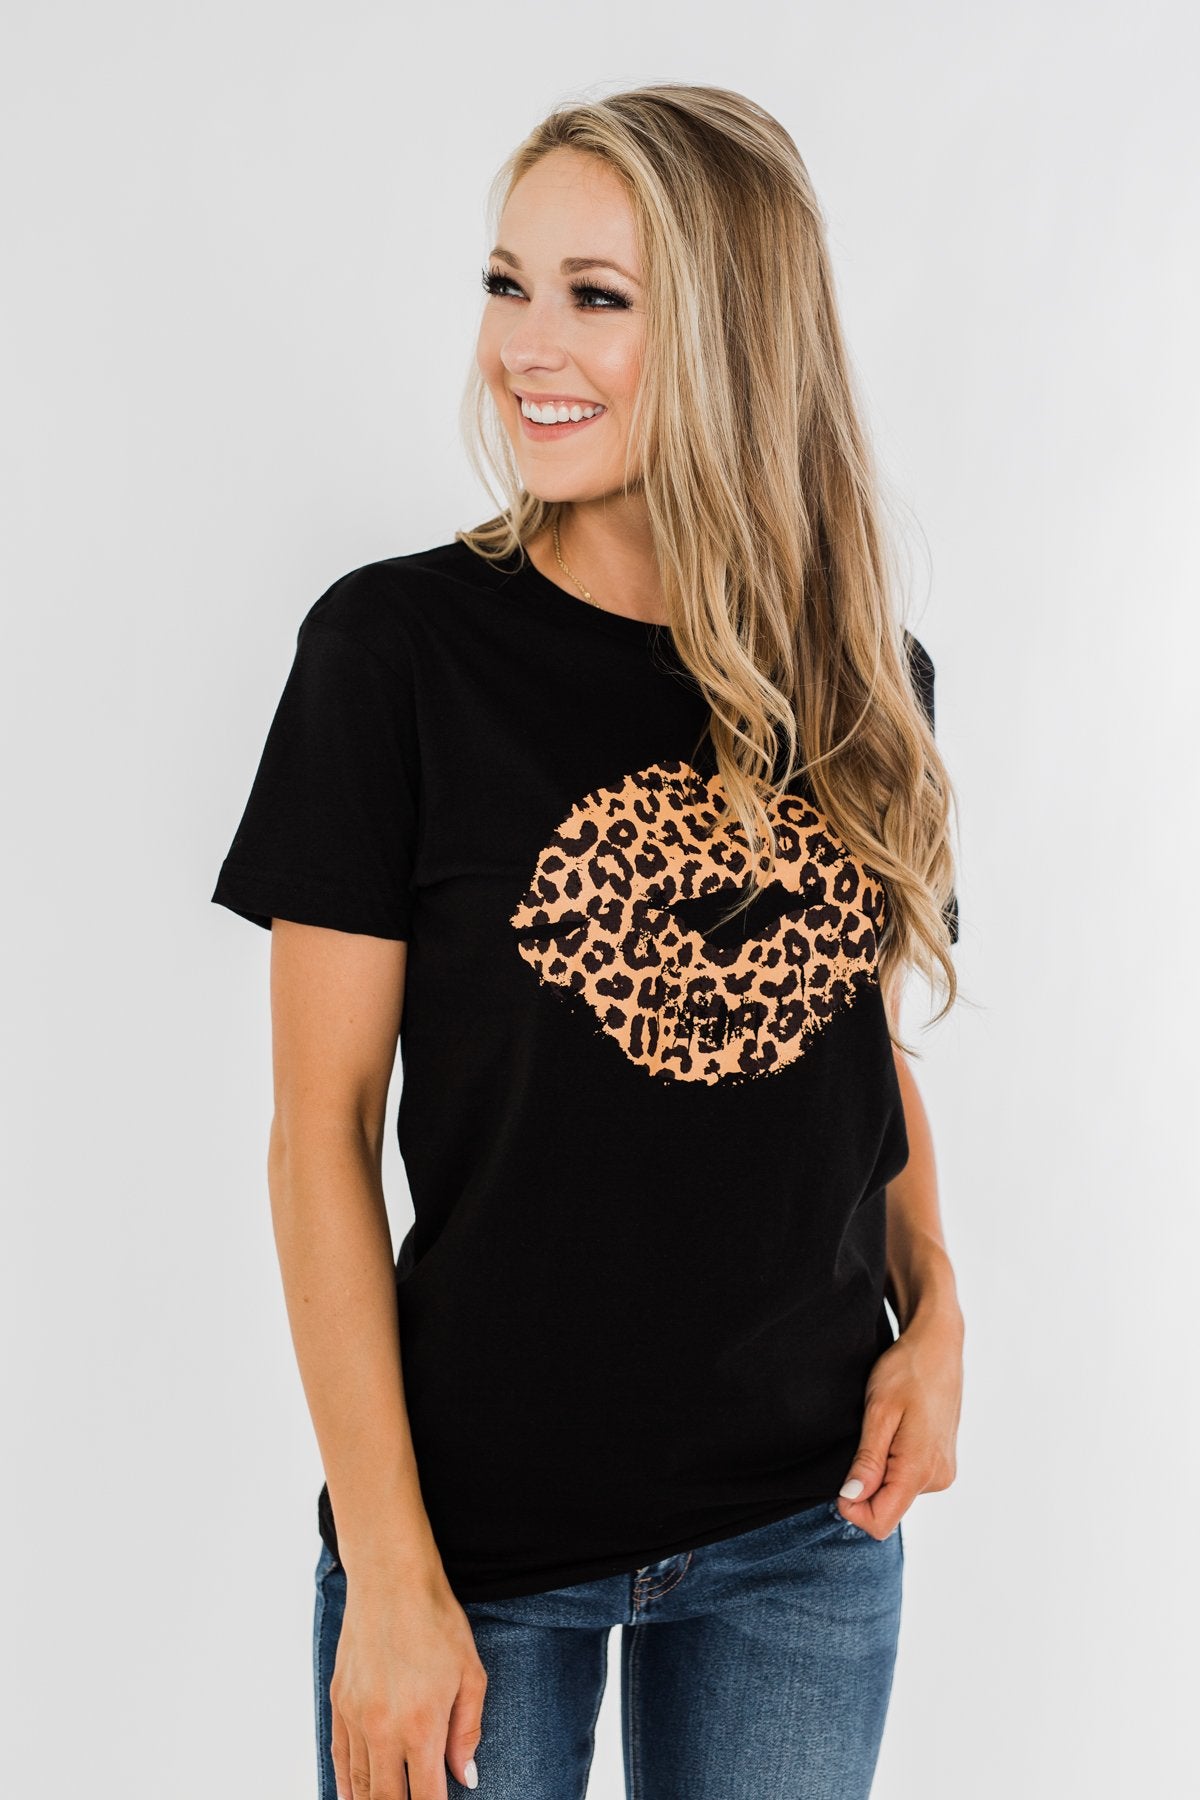 Leopard Lips Graphic Tee- Black